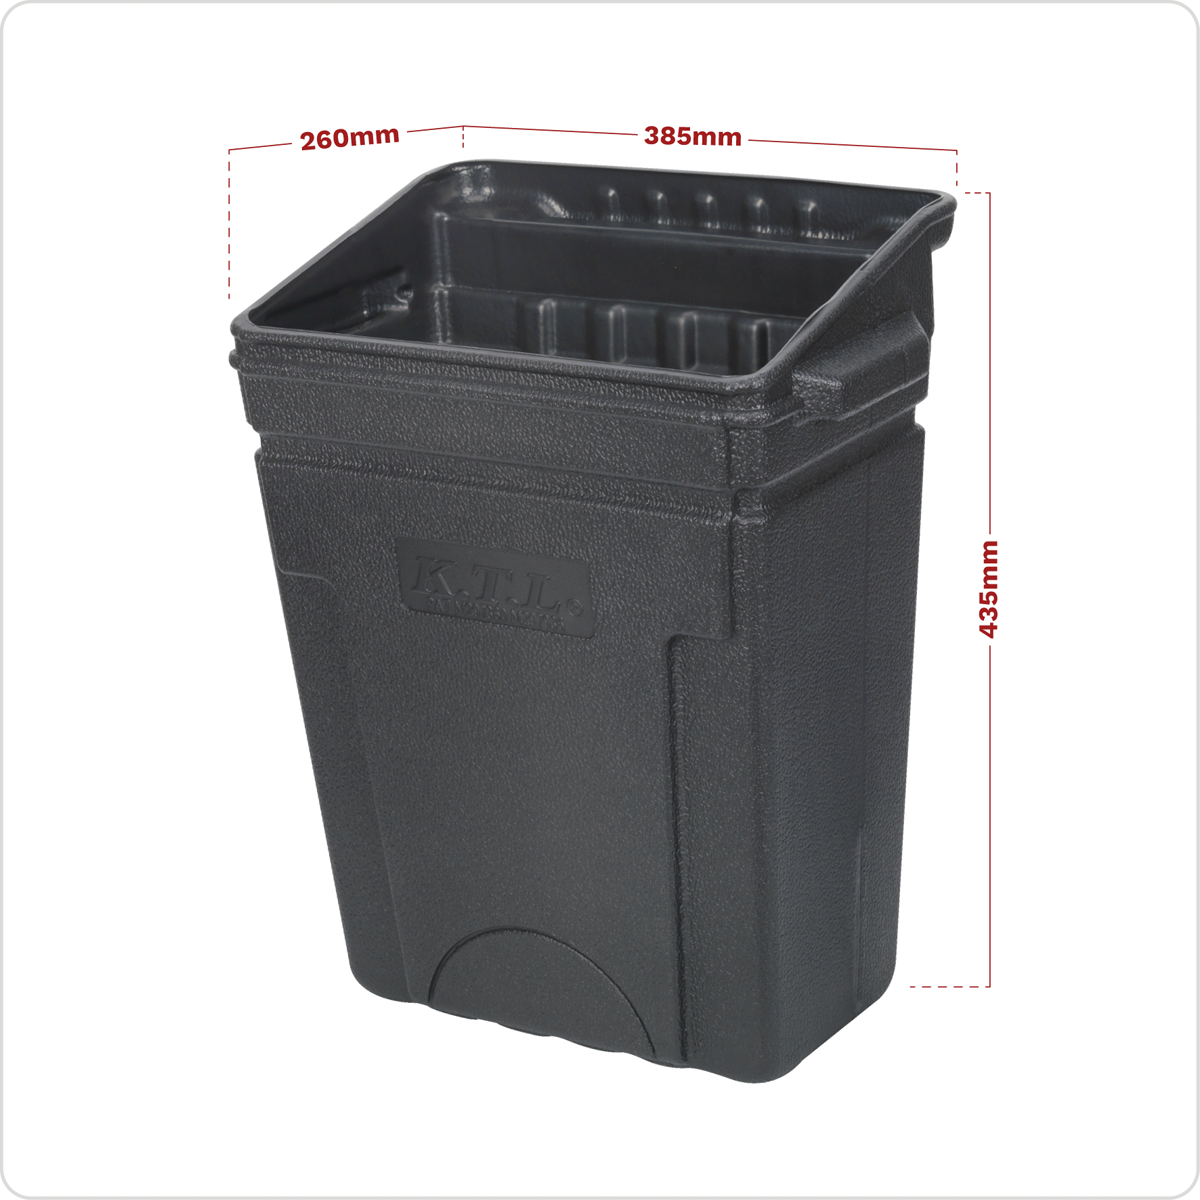 Sealey Waste Disposal Bin CX312